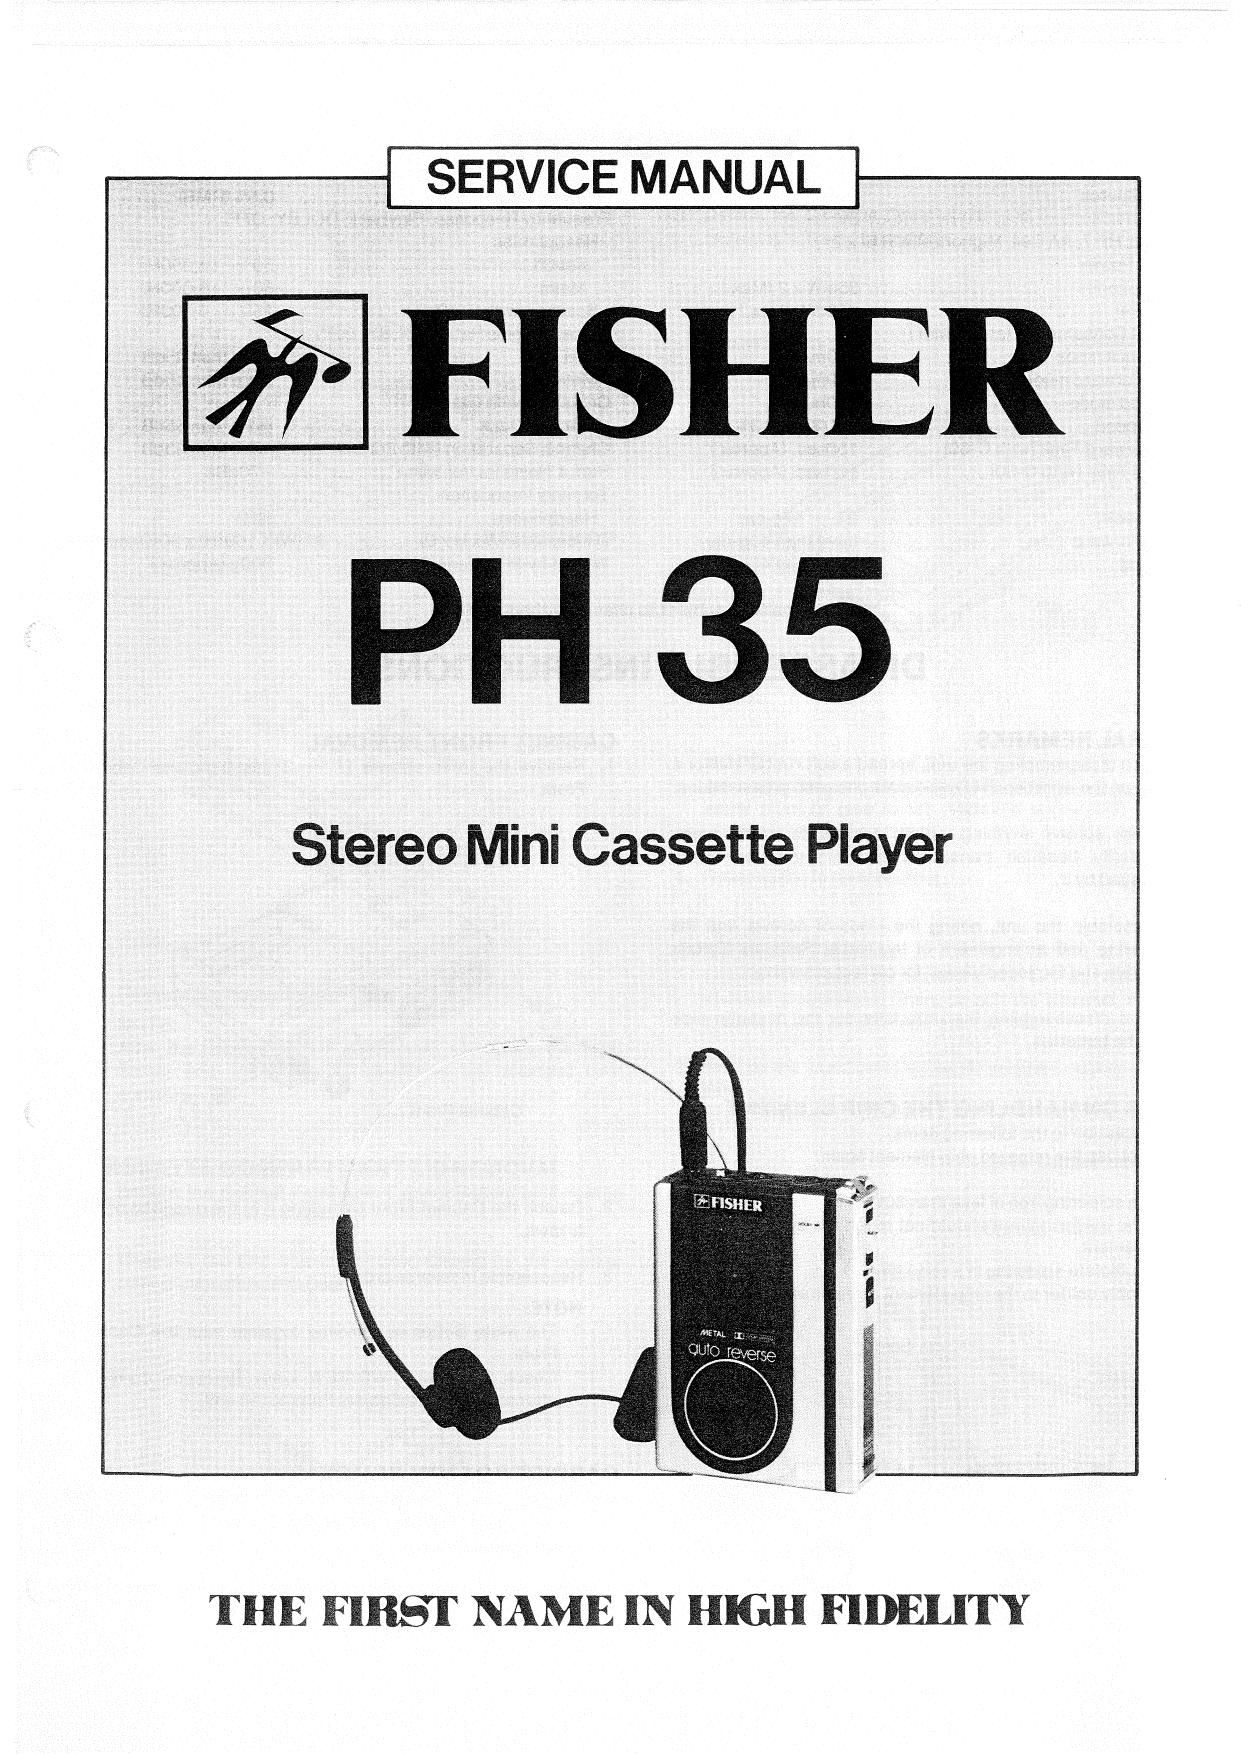 Fisher PH 35 Service Manual